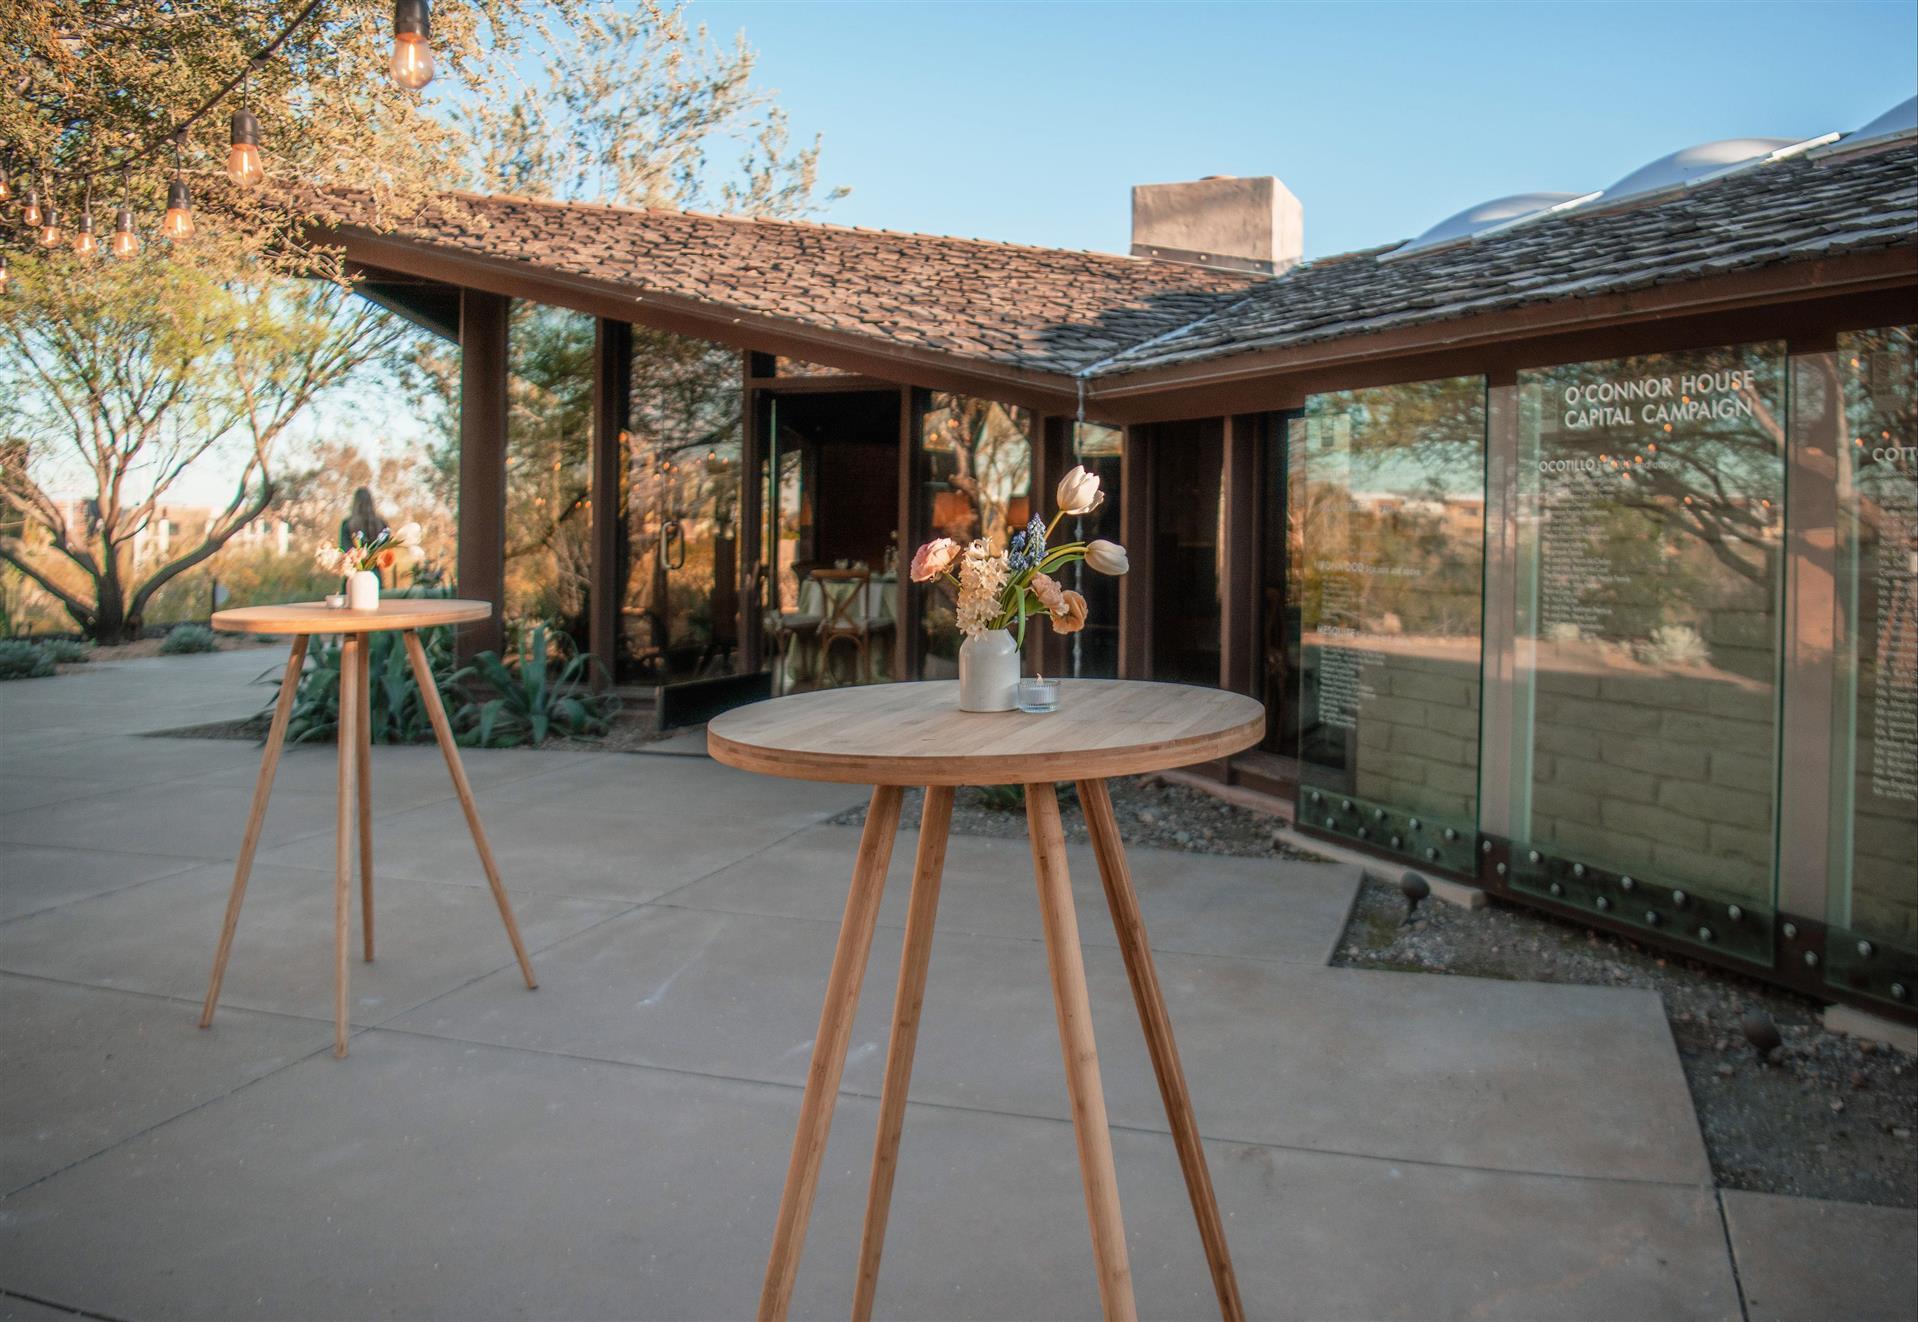 Sandra Day O’Connor House in Tempe, AZ